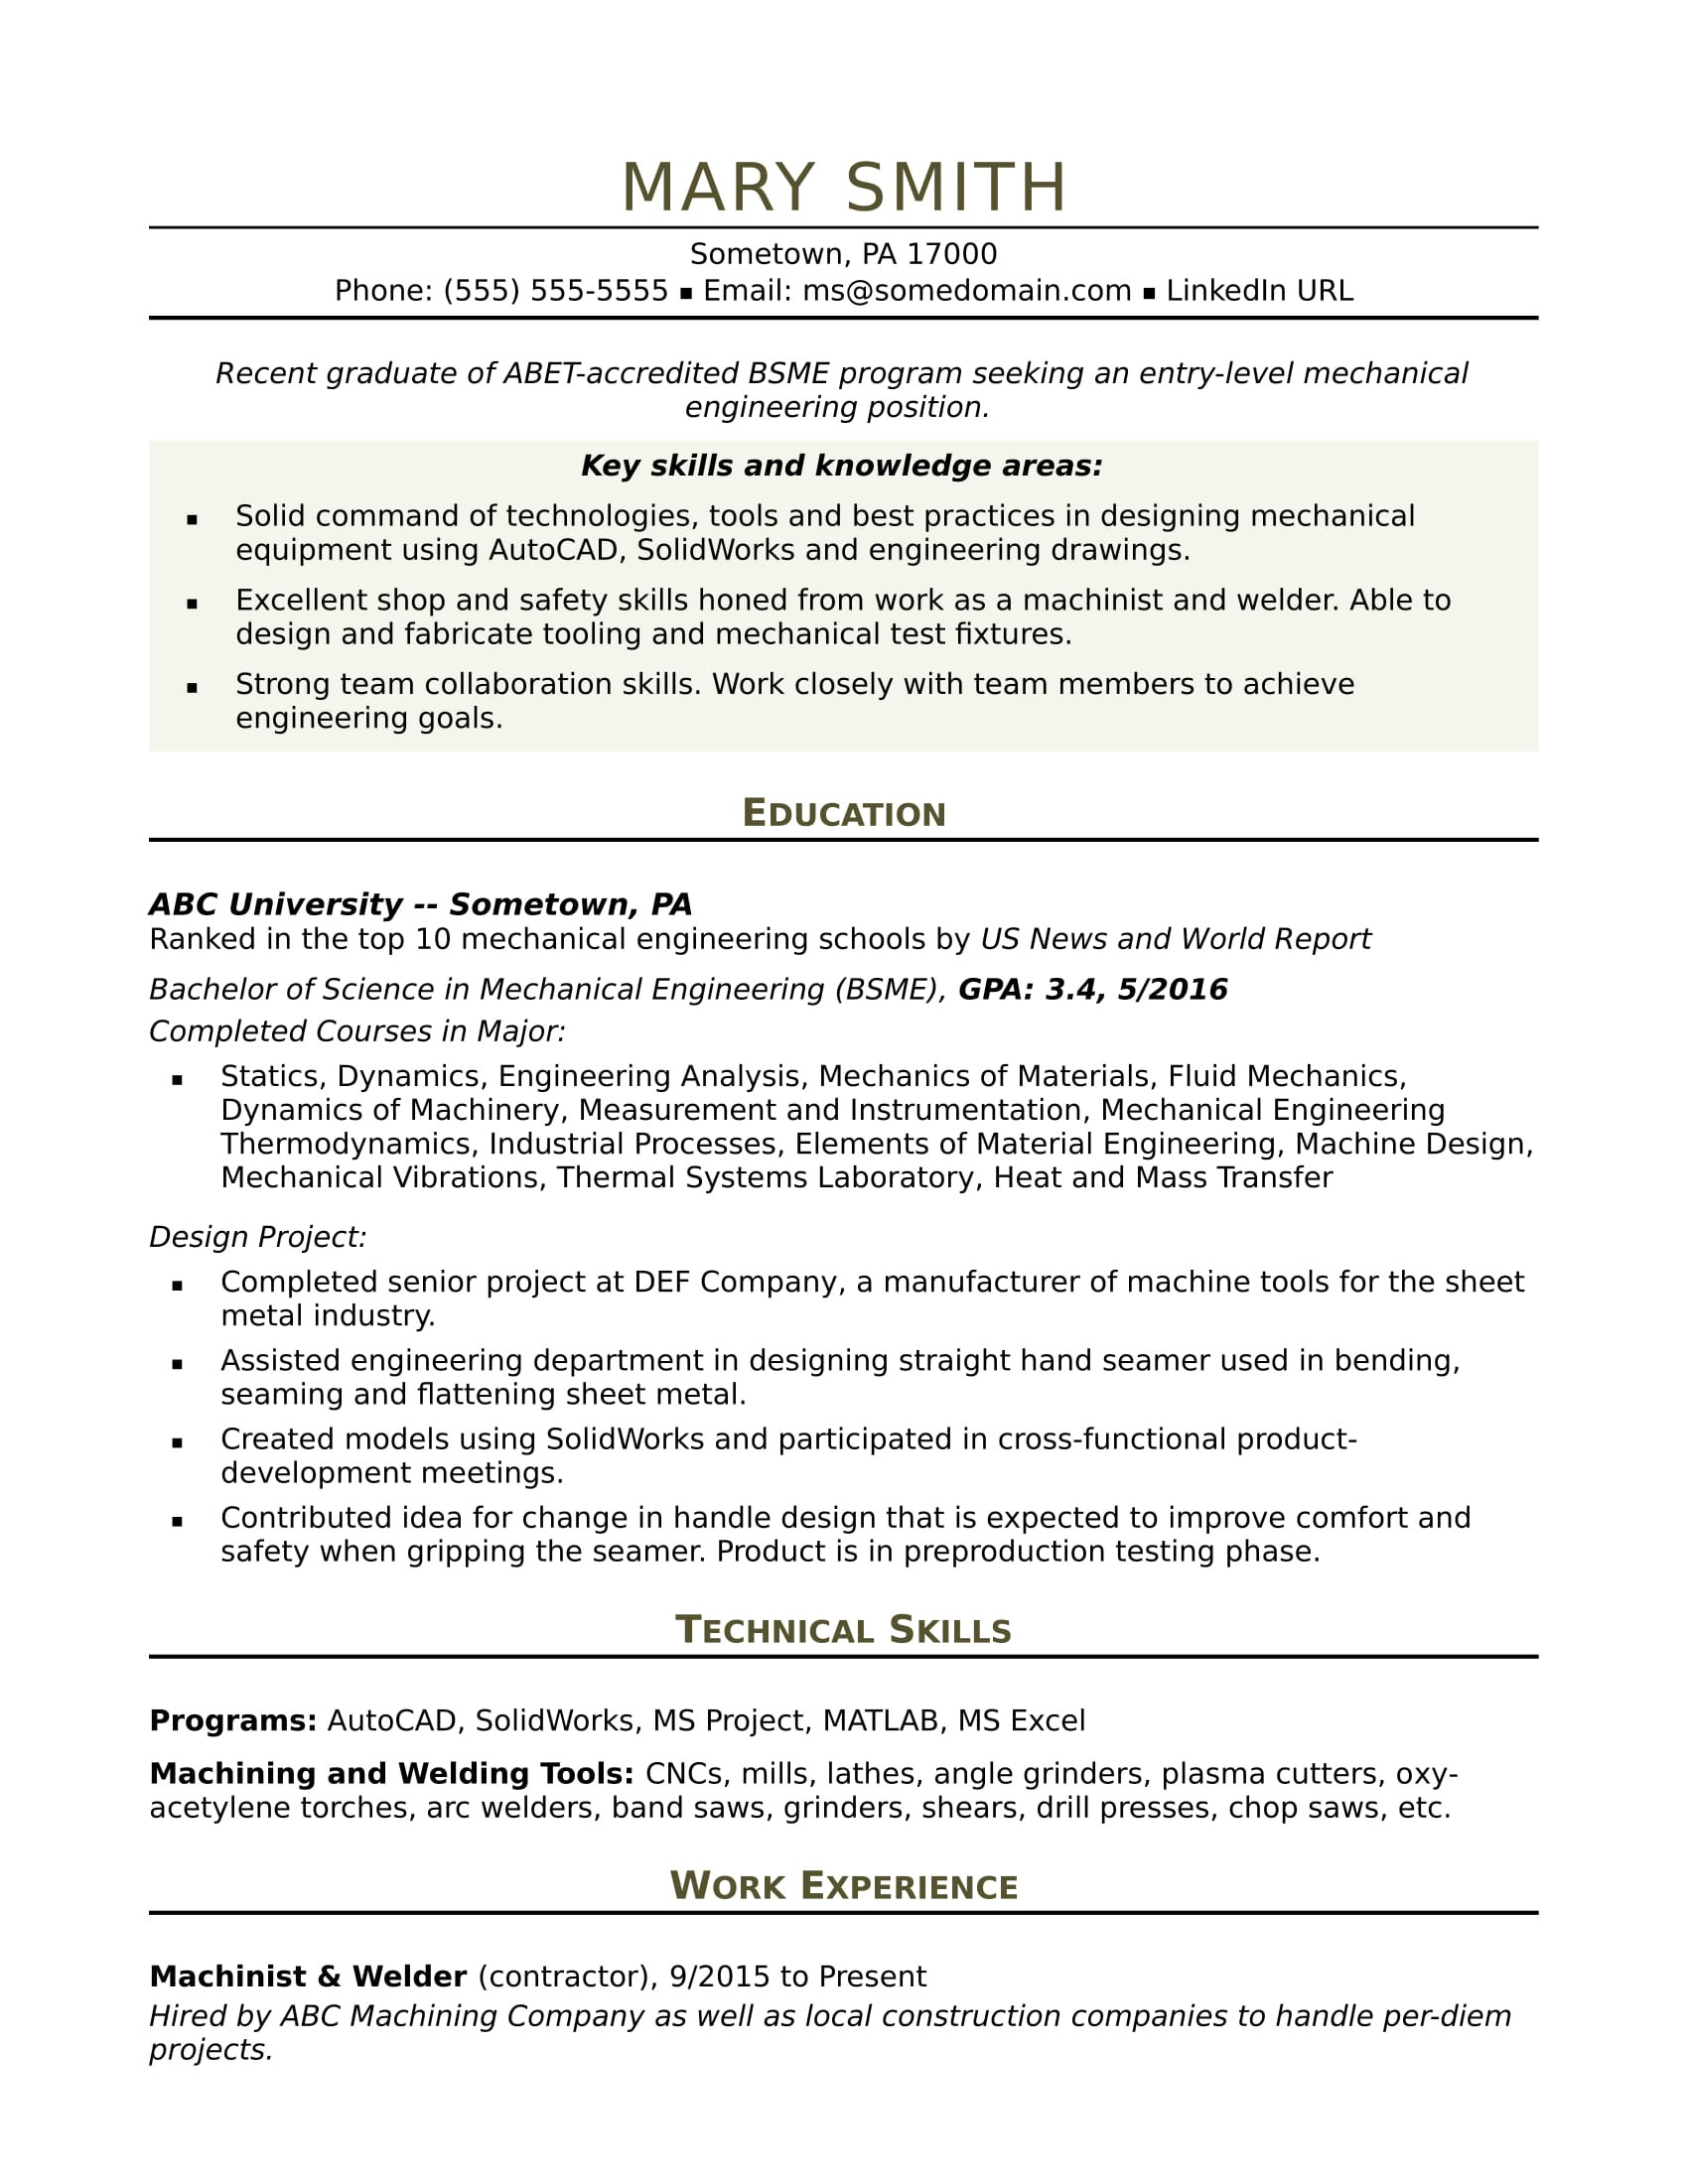 Mechanical Engineering Work Experience Resume Sample Mechanical Engineer Resume: Entry-level Monster.com